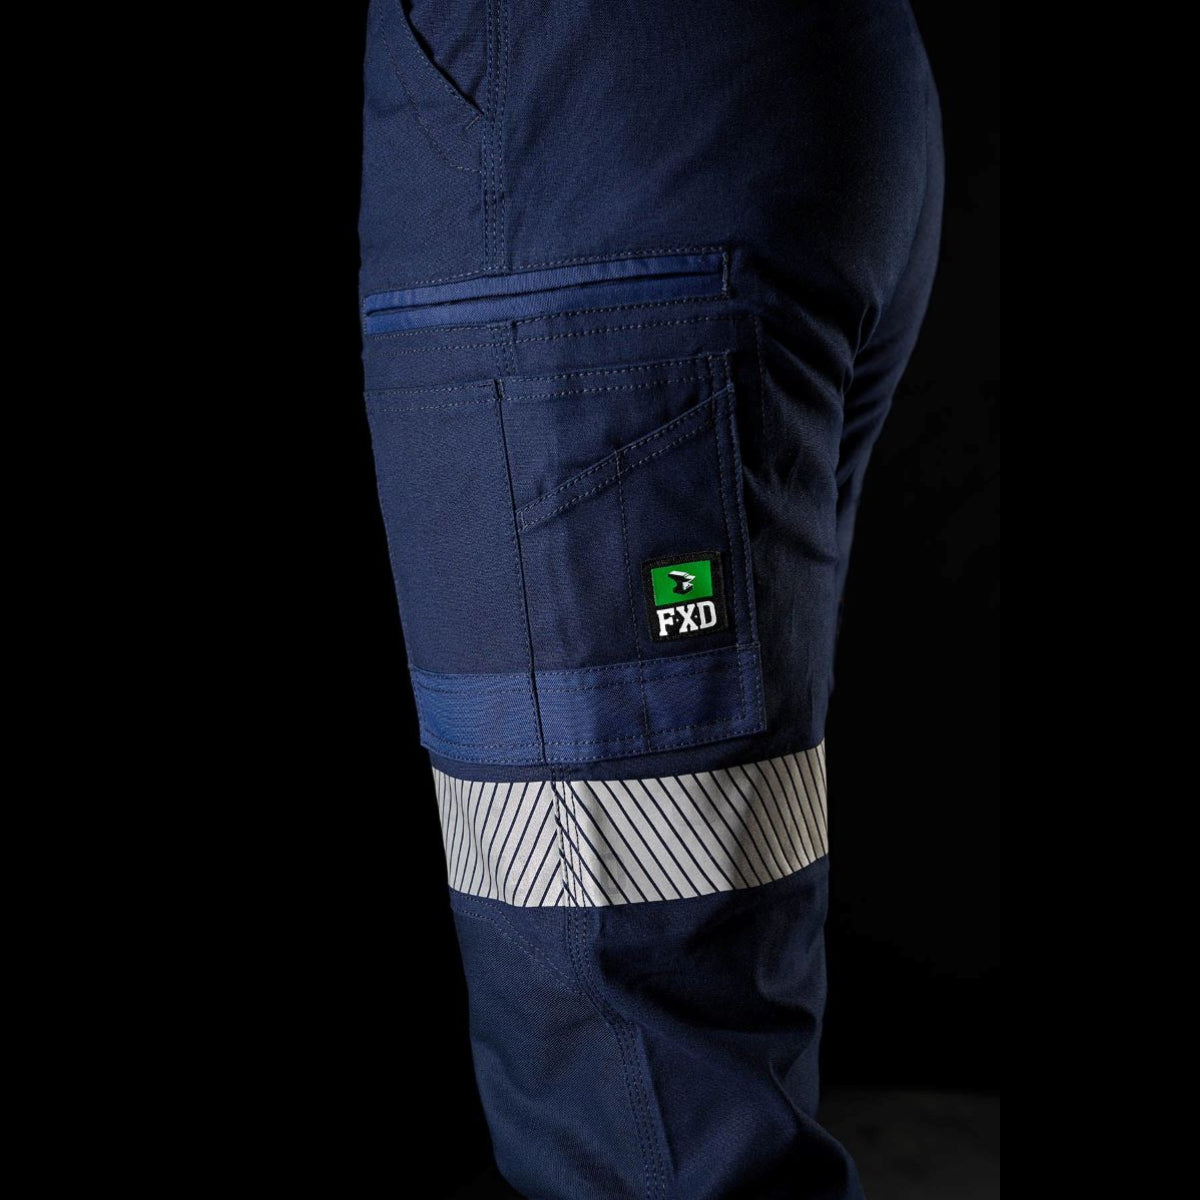 Form Work Wear Cuffed Work Pants Size 36 Colour Khaki  toolscom